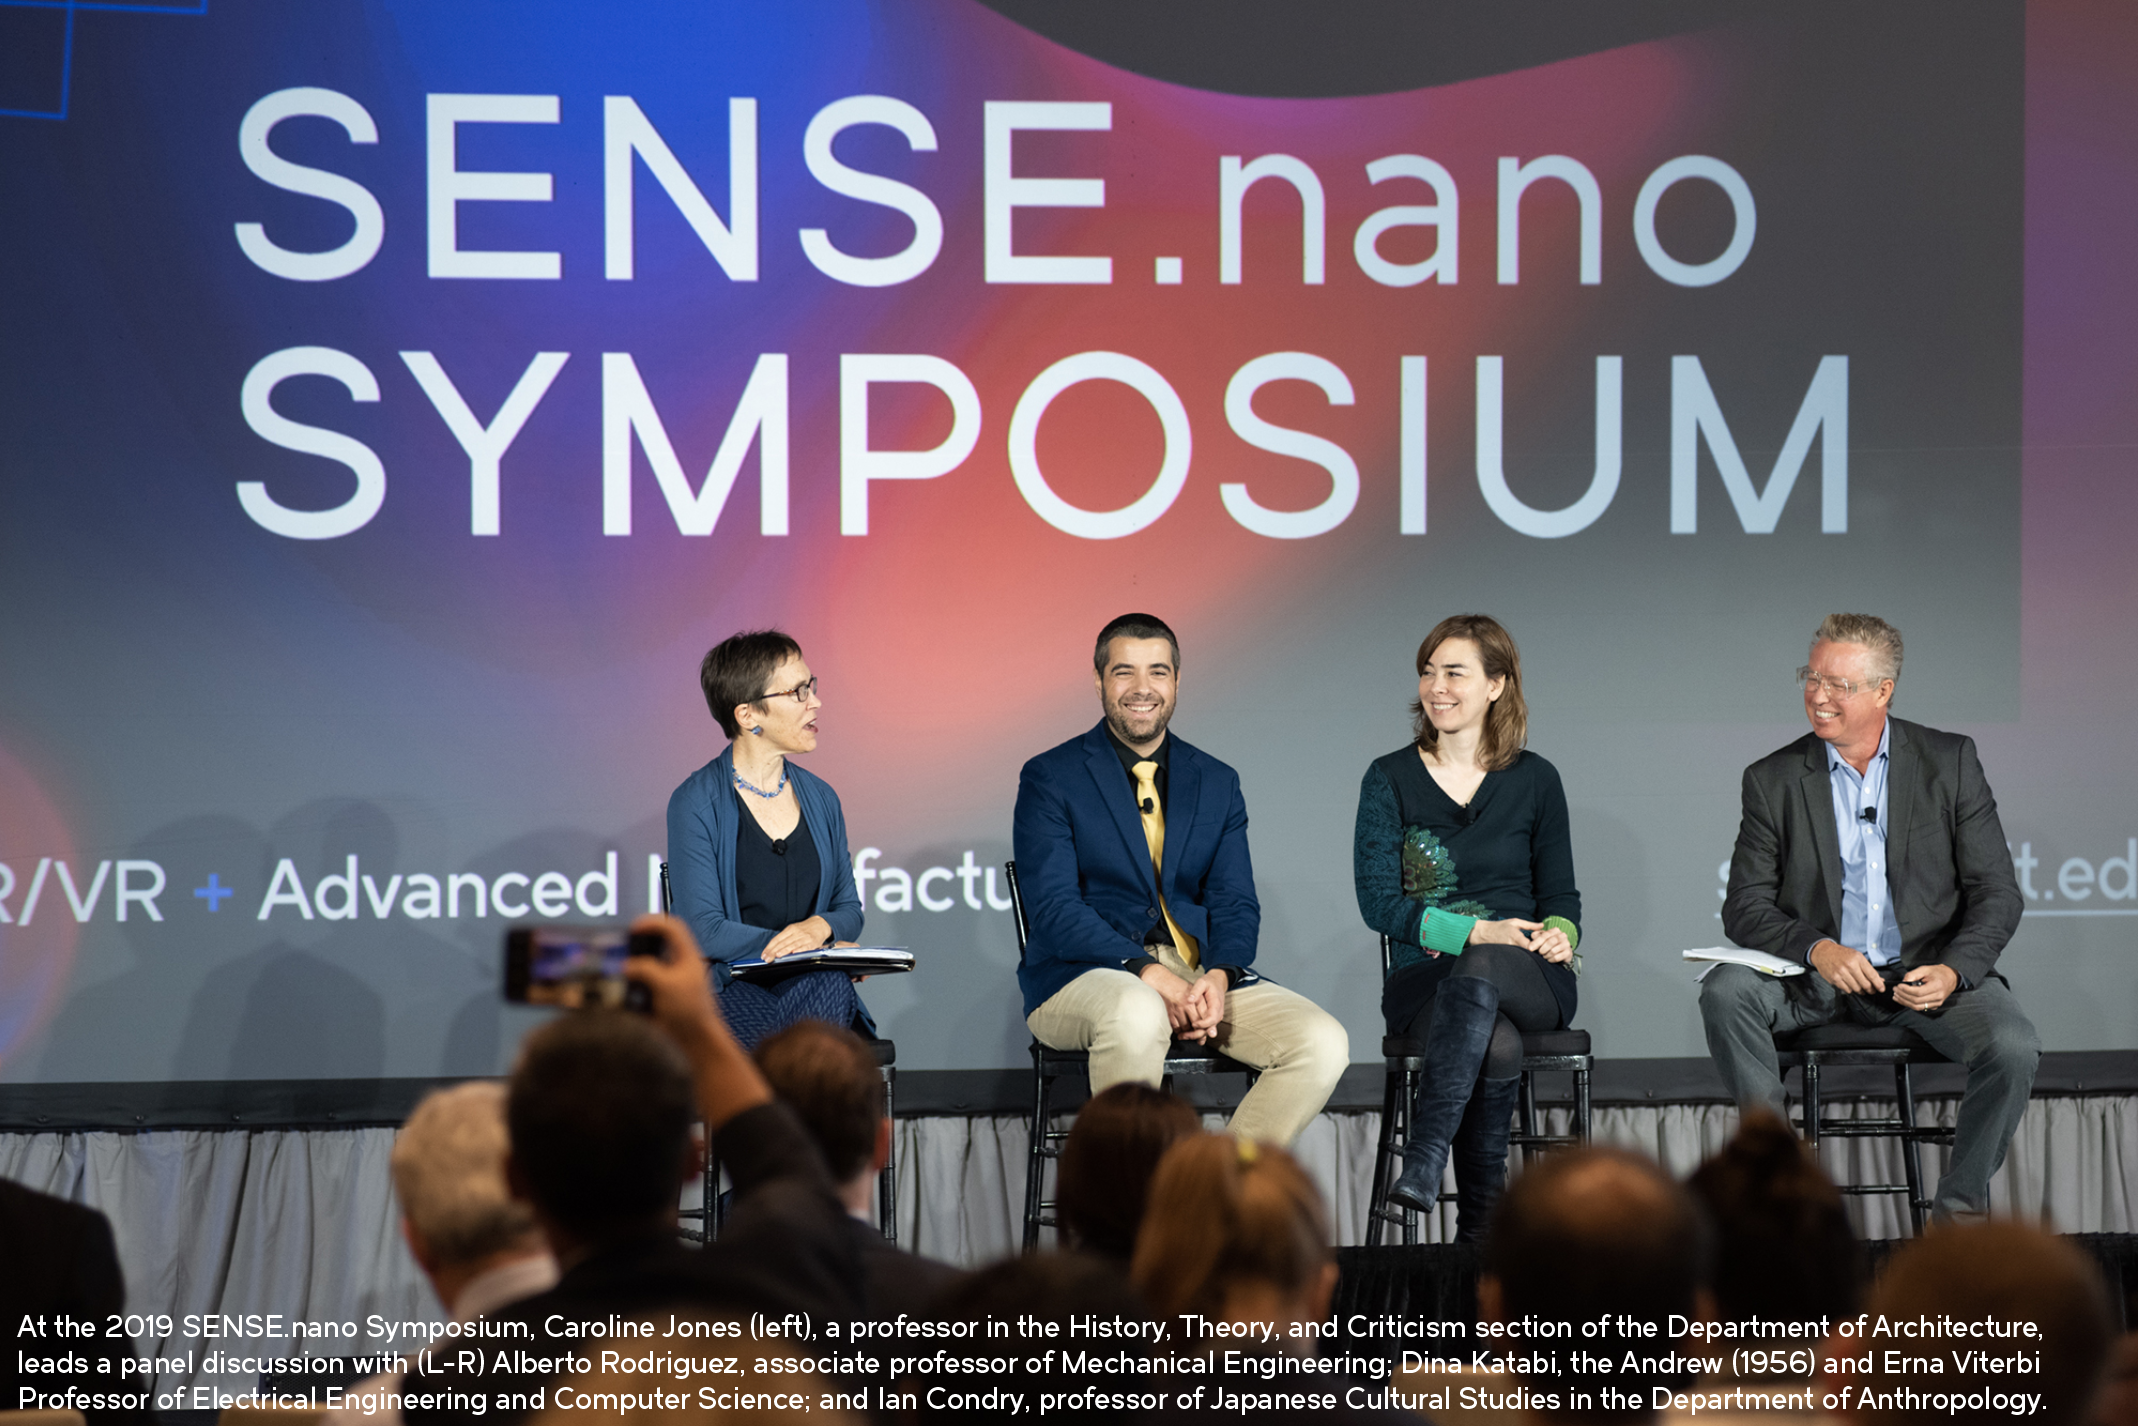 SENSE.nano panel discussion